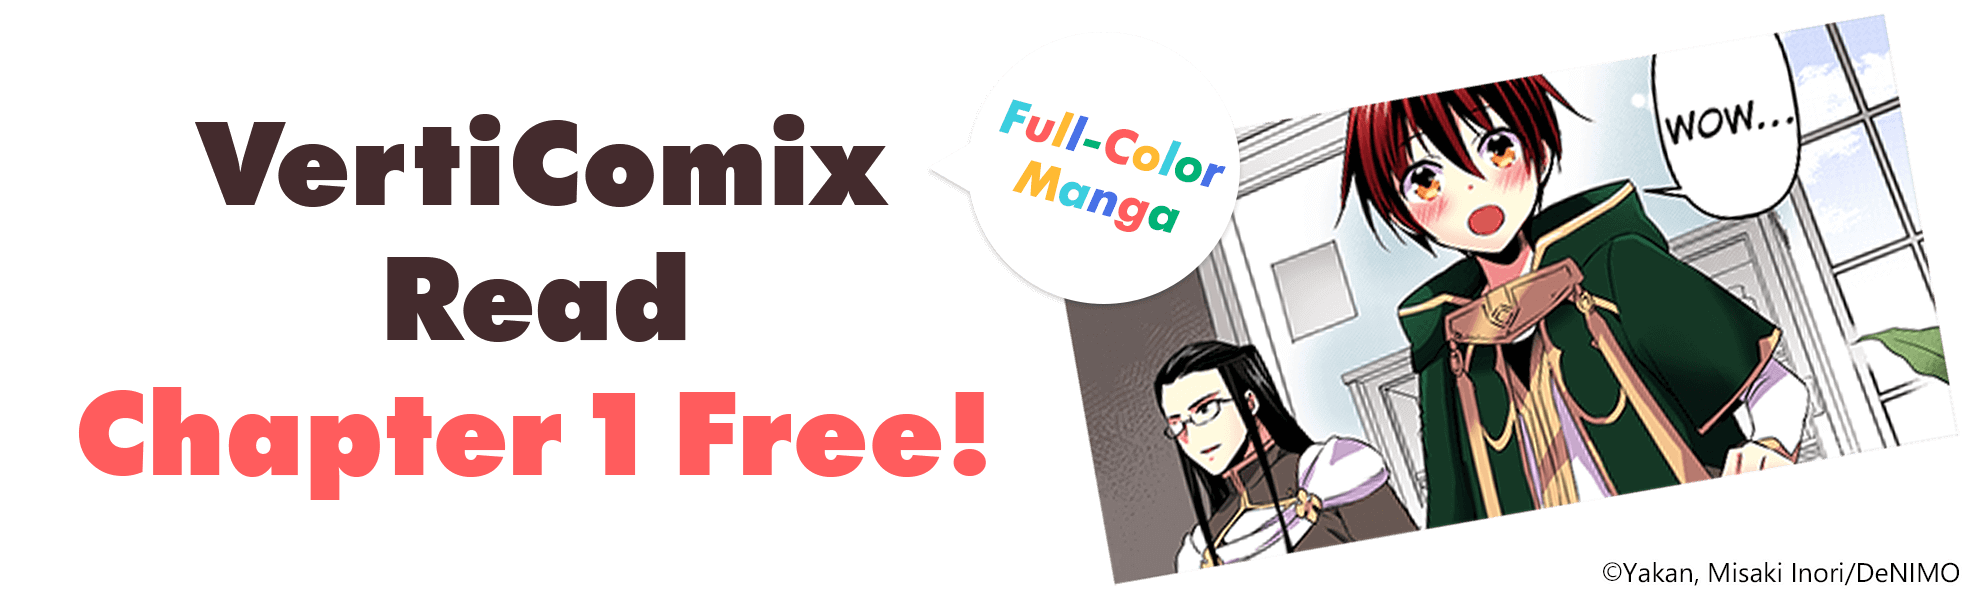 VertiComix (Full-Color Manga) Read Chapter 1 Free!